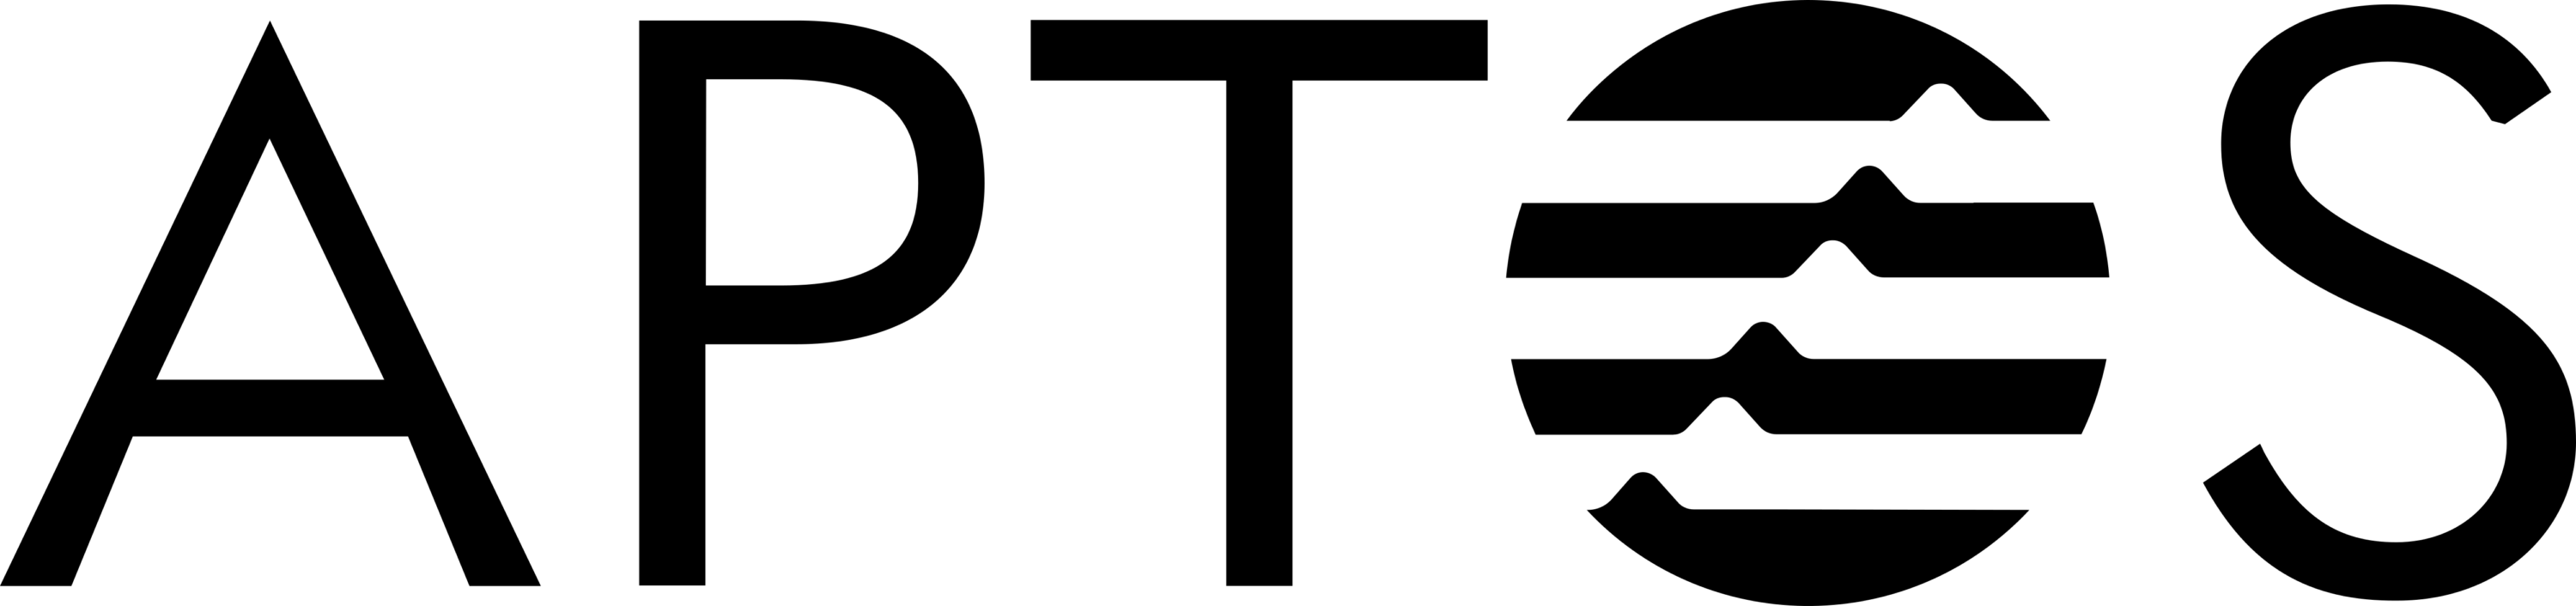 Aptos Logo full